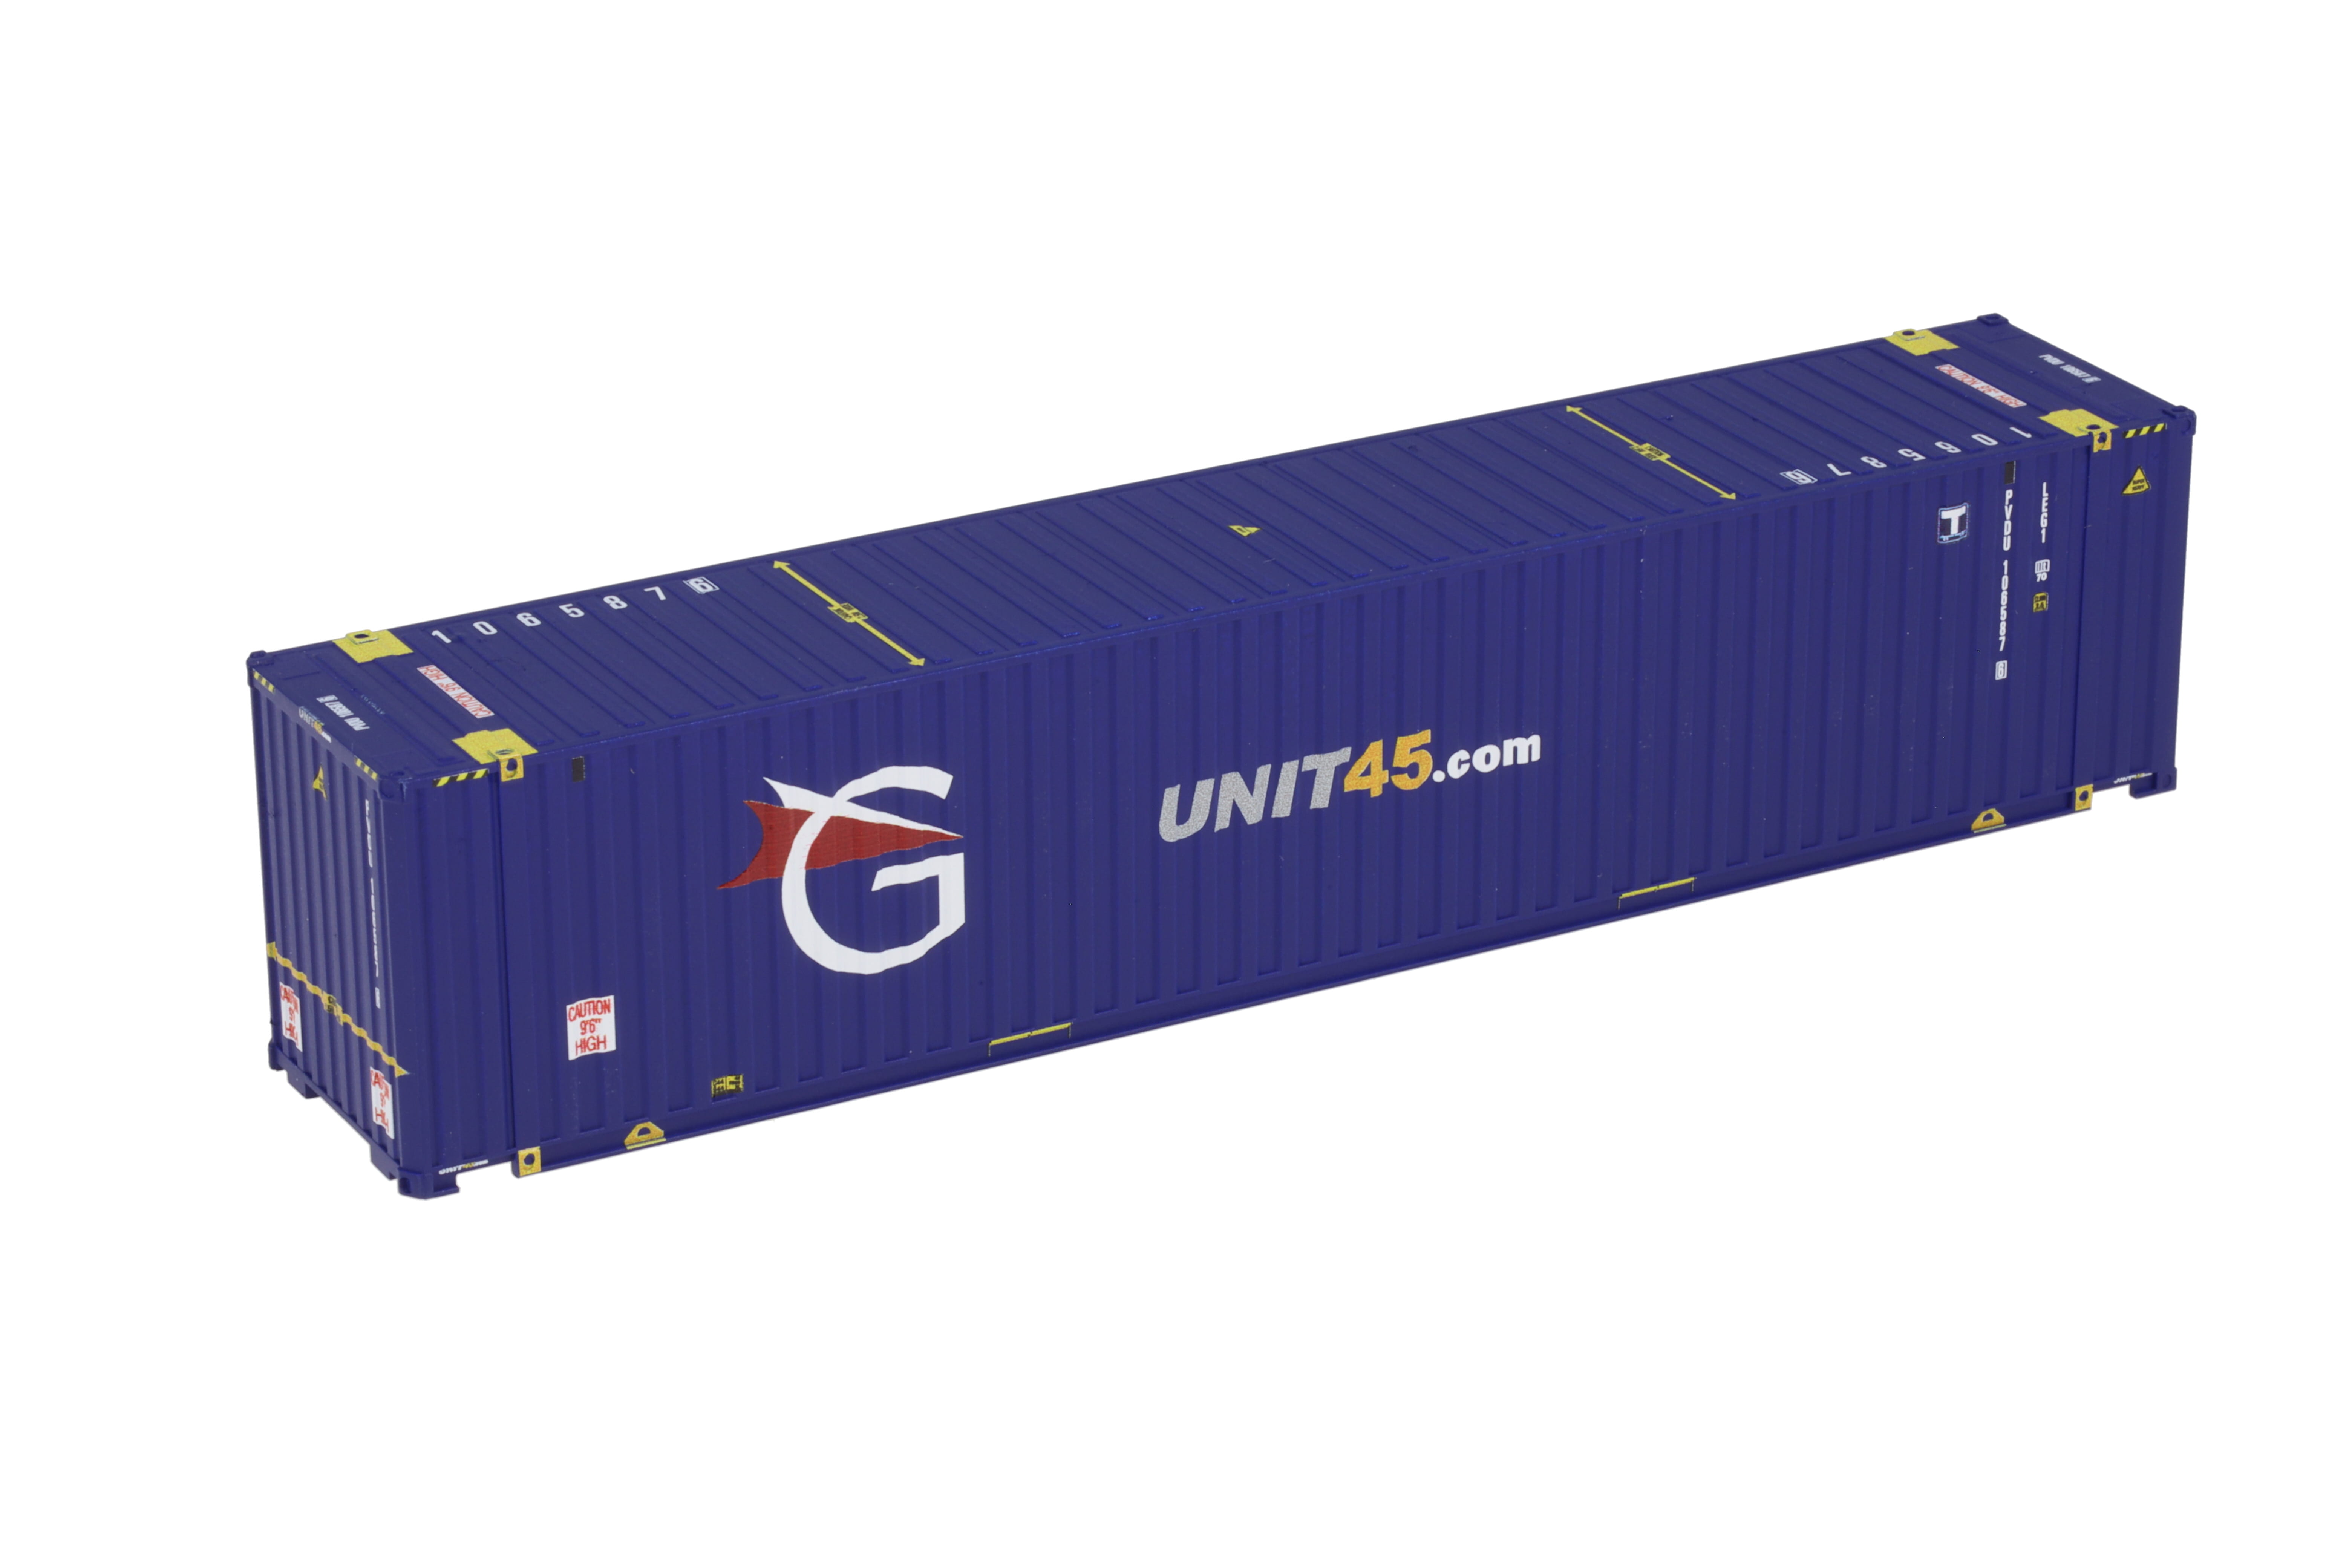 1:87 45´ Container UNIT45 mit Zusatzlogo "Gopet Trans", WB-A HC (Euro), # PVDU 106587